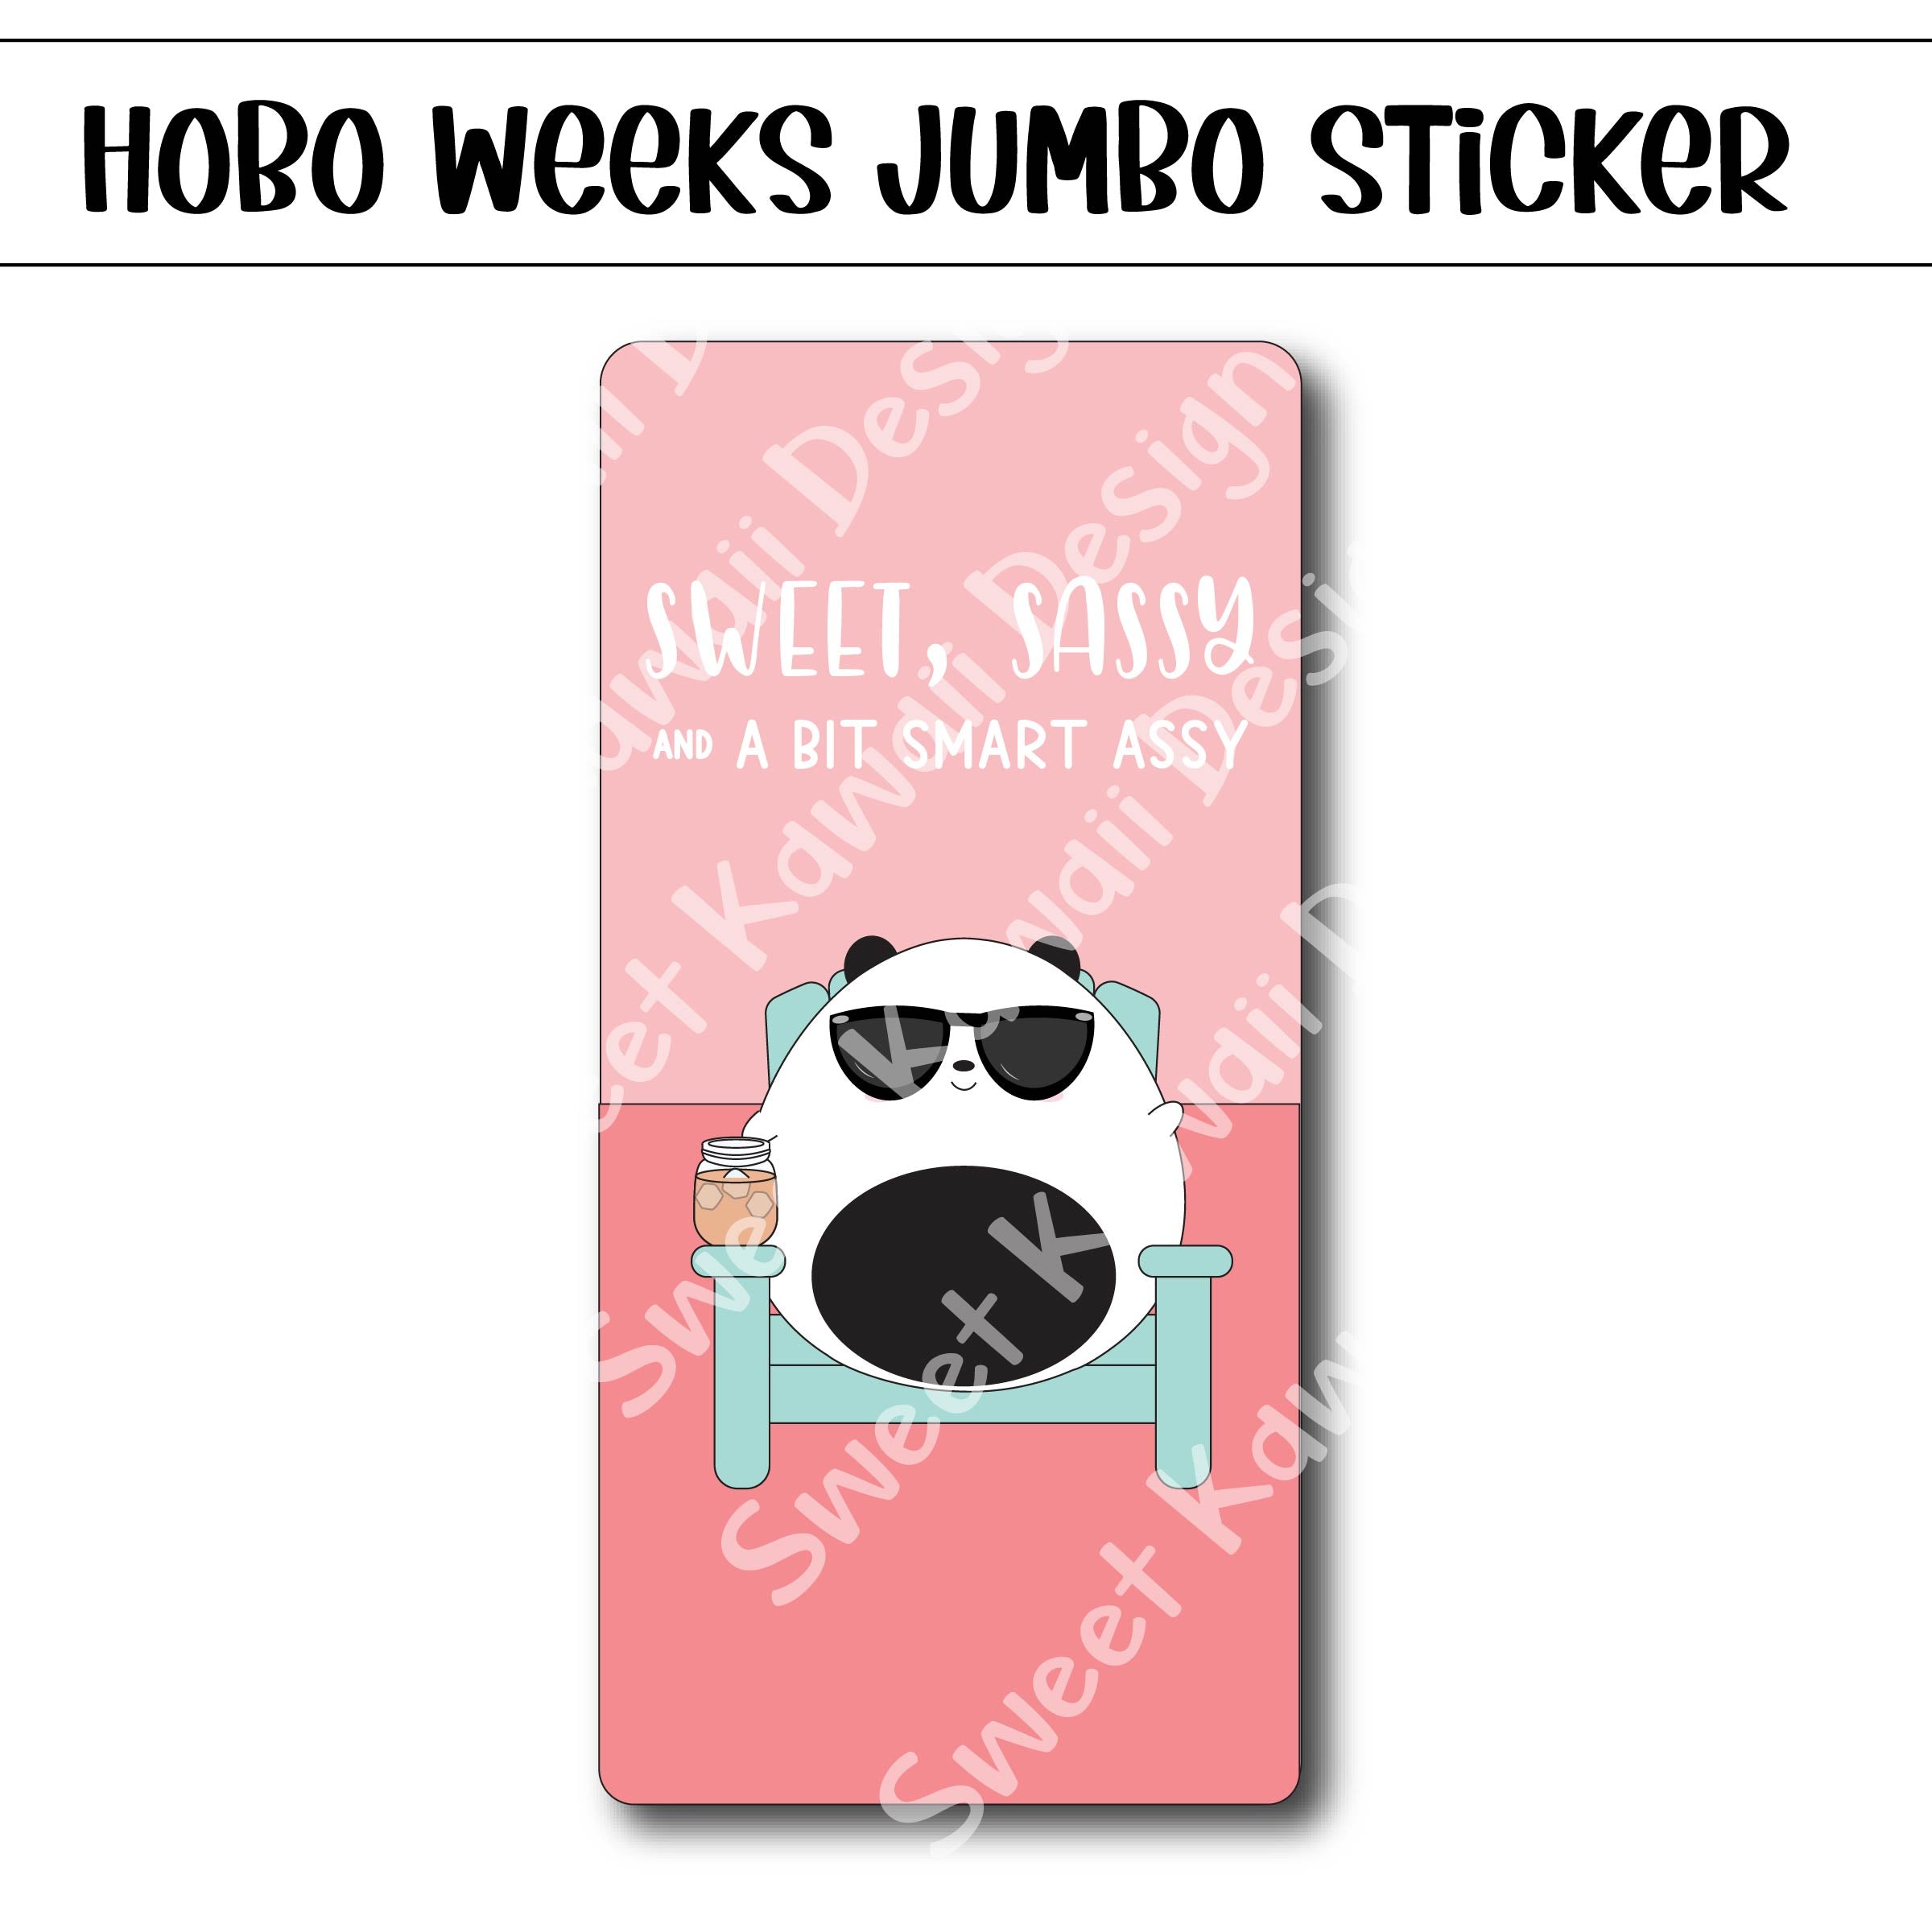 Kawaii Jumbo Sticker - Sweet and Sassy - Size Options Available